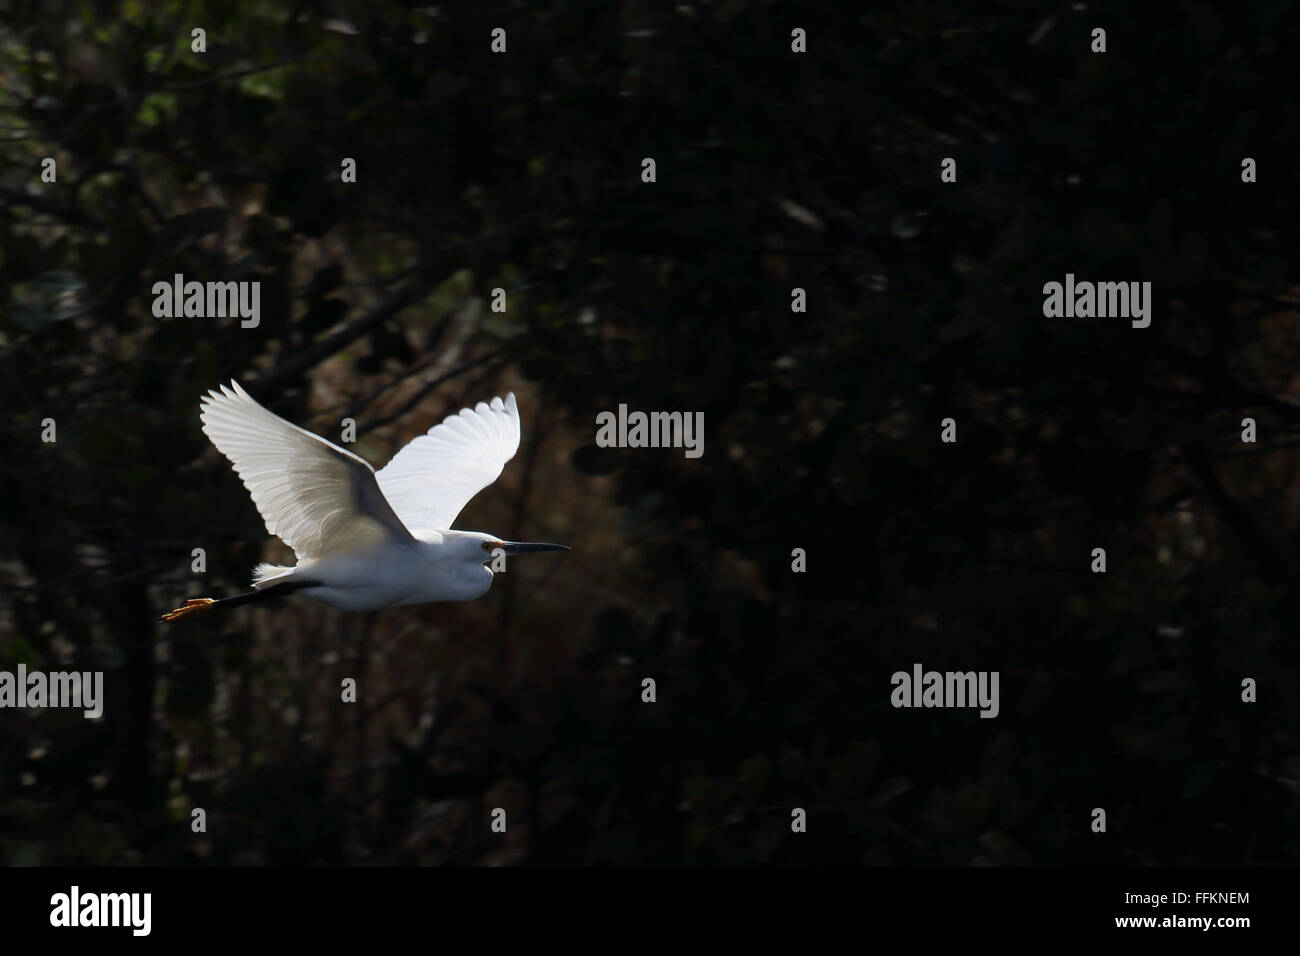 Snowy Egret flying before dark bushes Stock Photo